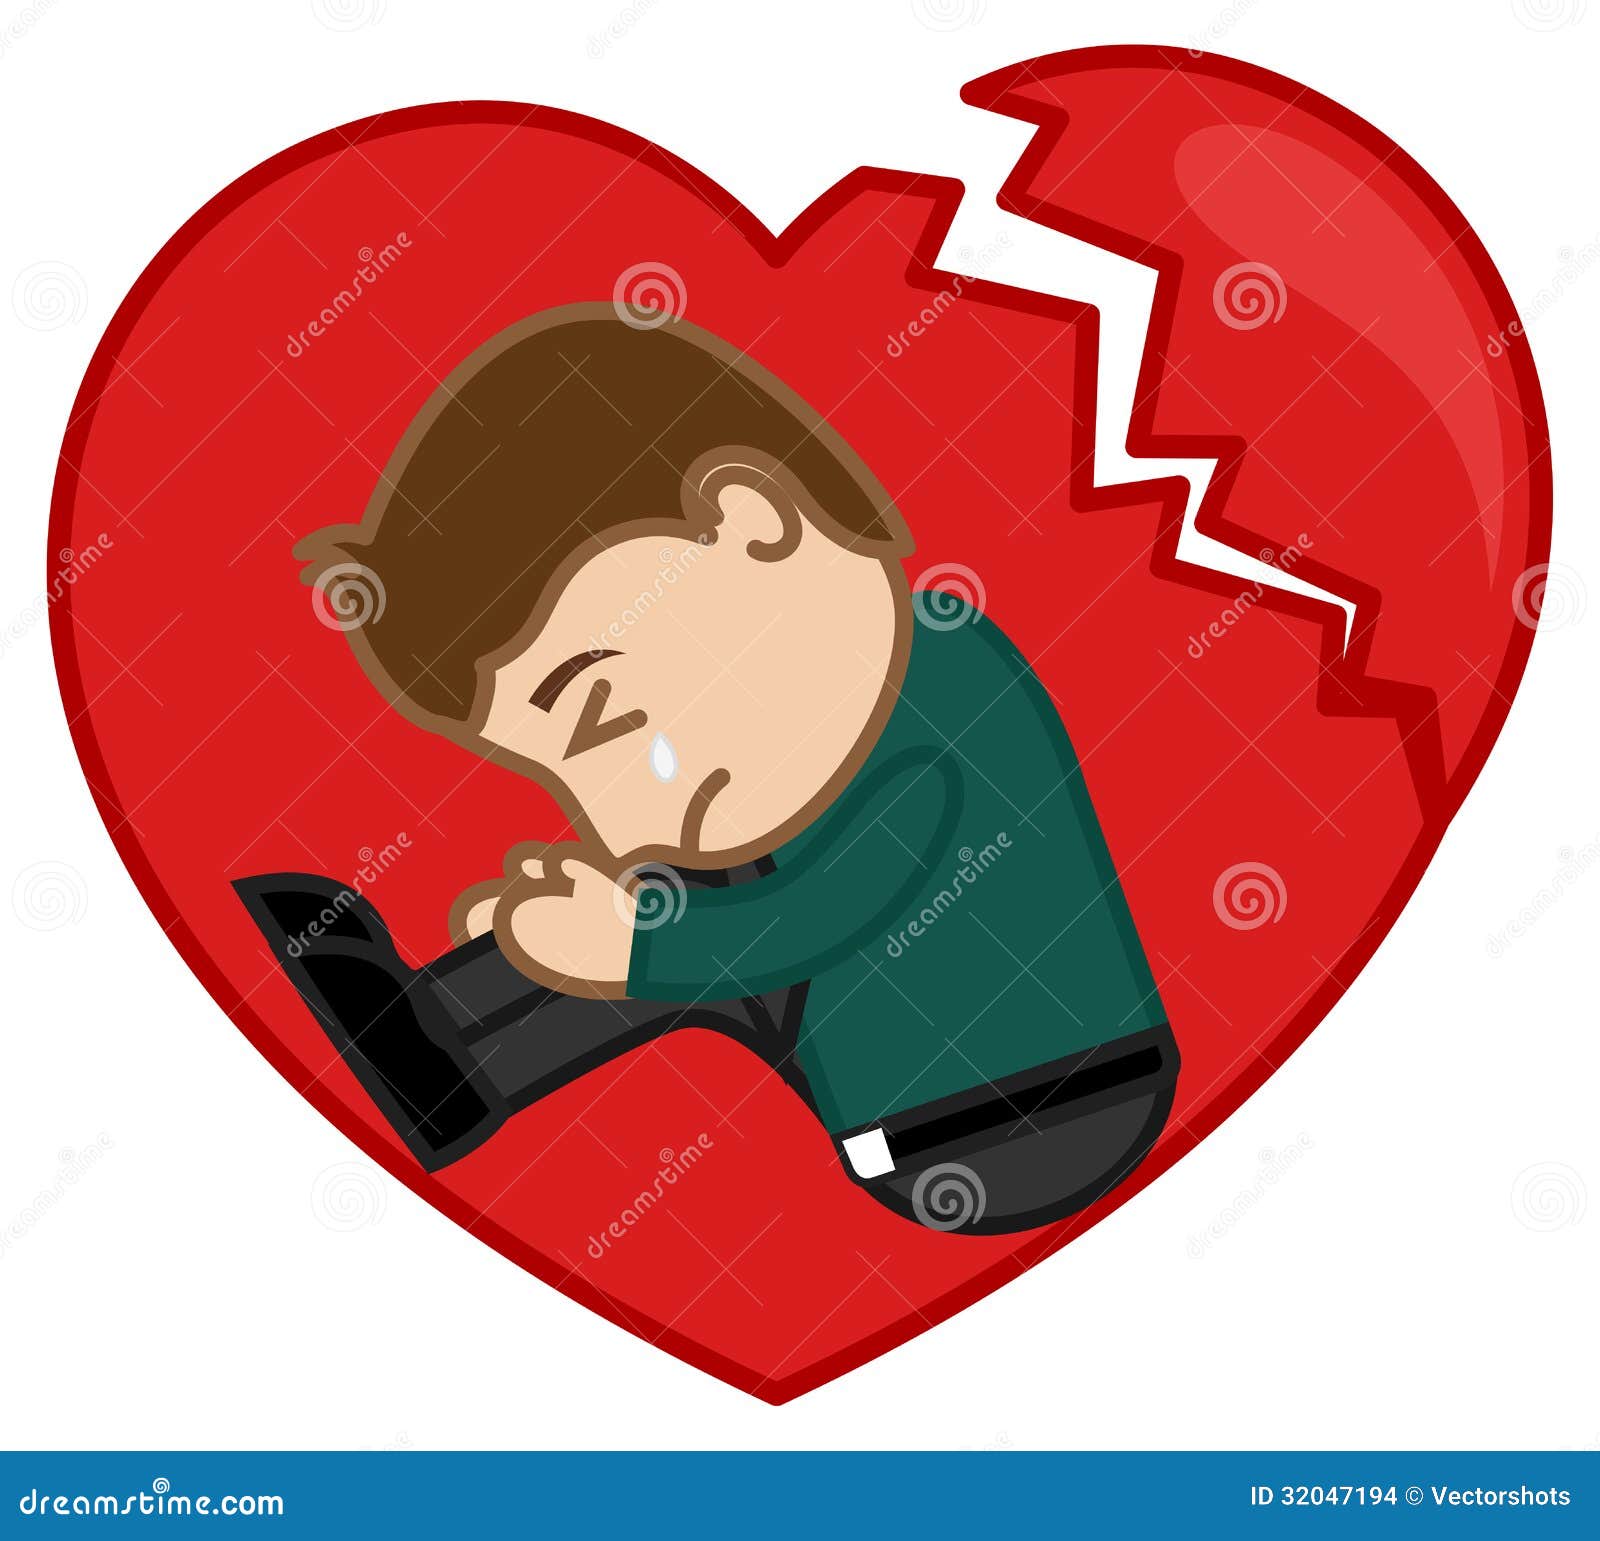 Sad Man Crying in a Broken Heart Stock Vector - Illustration of ...